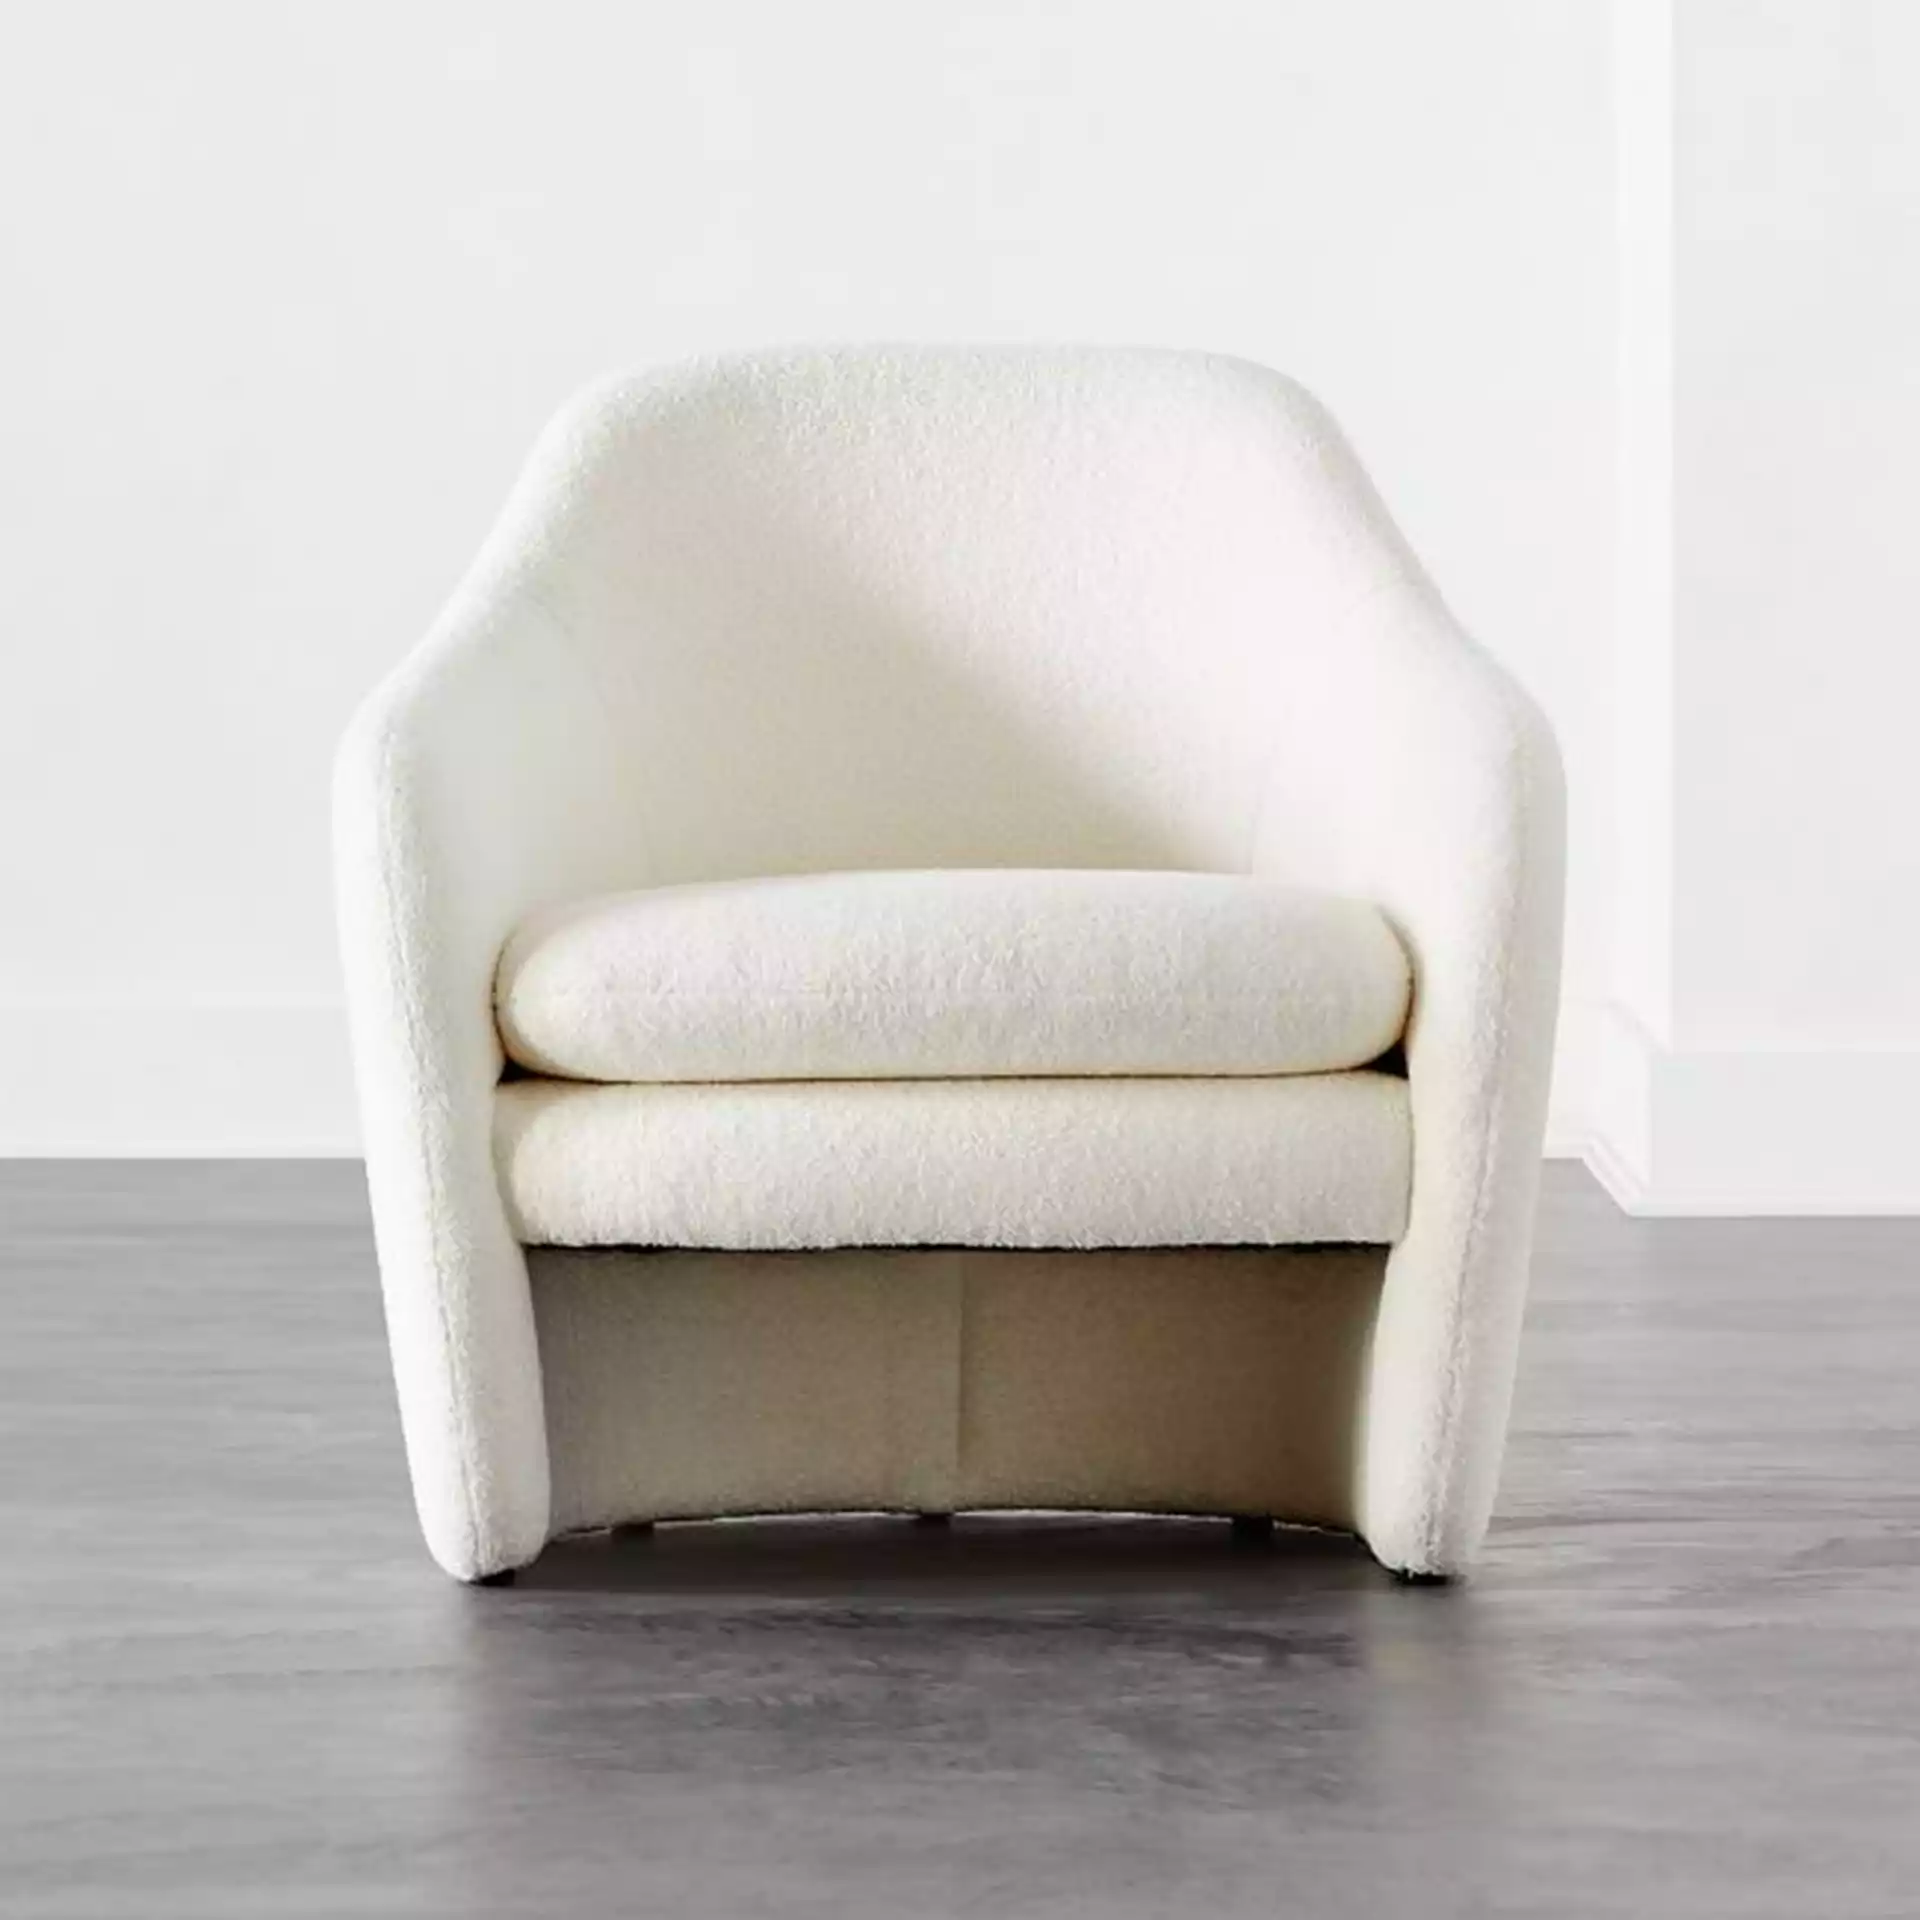 Pavia Lounge Chair RESTOCK Mid January 2022